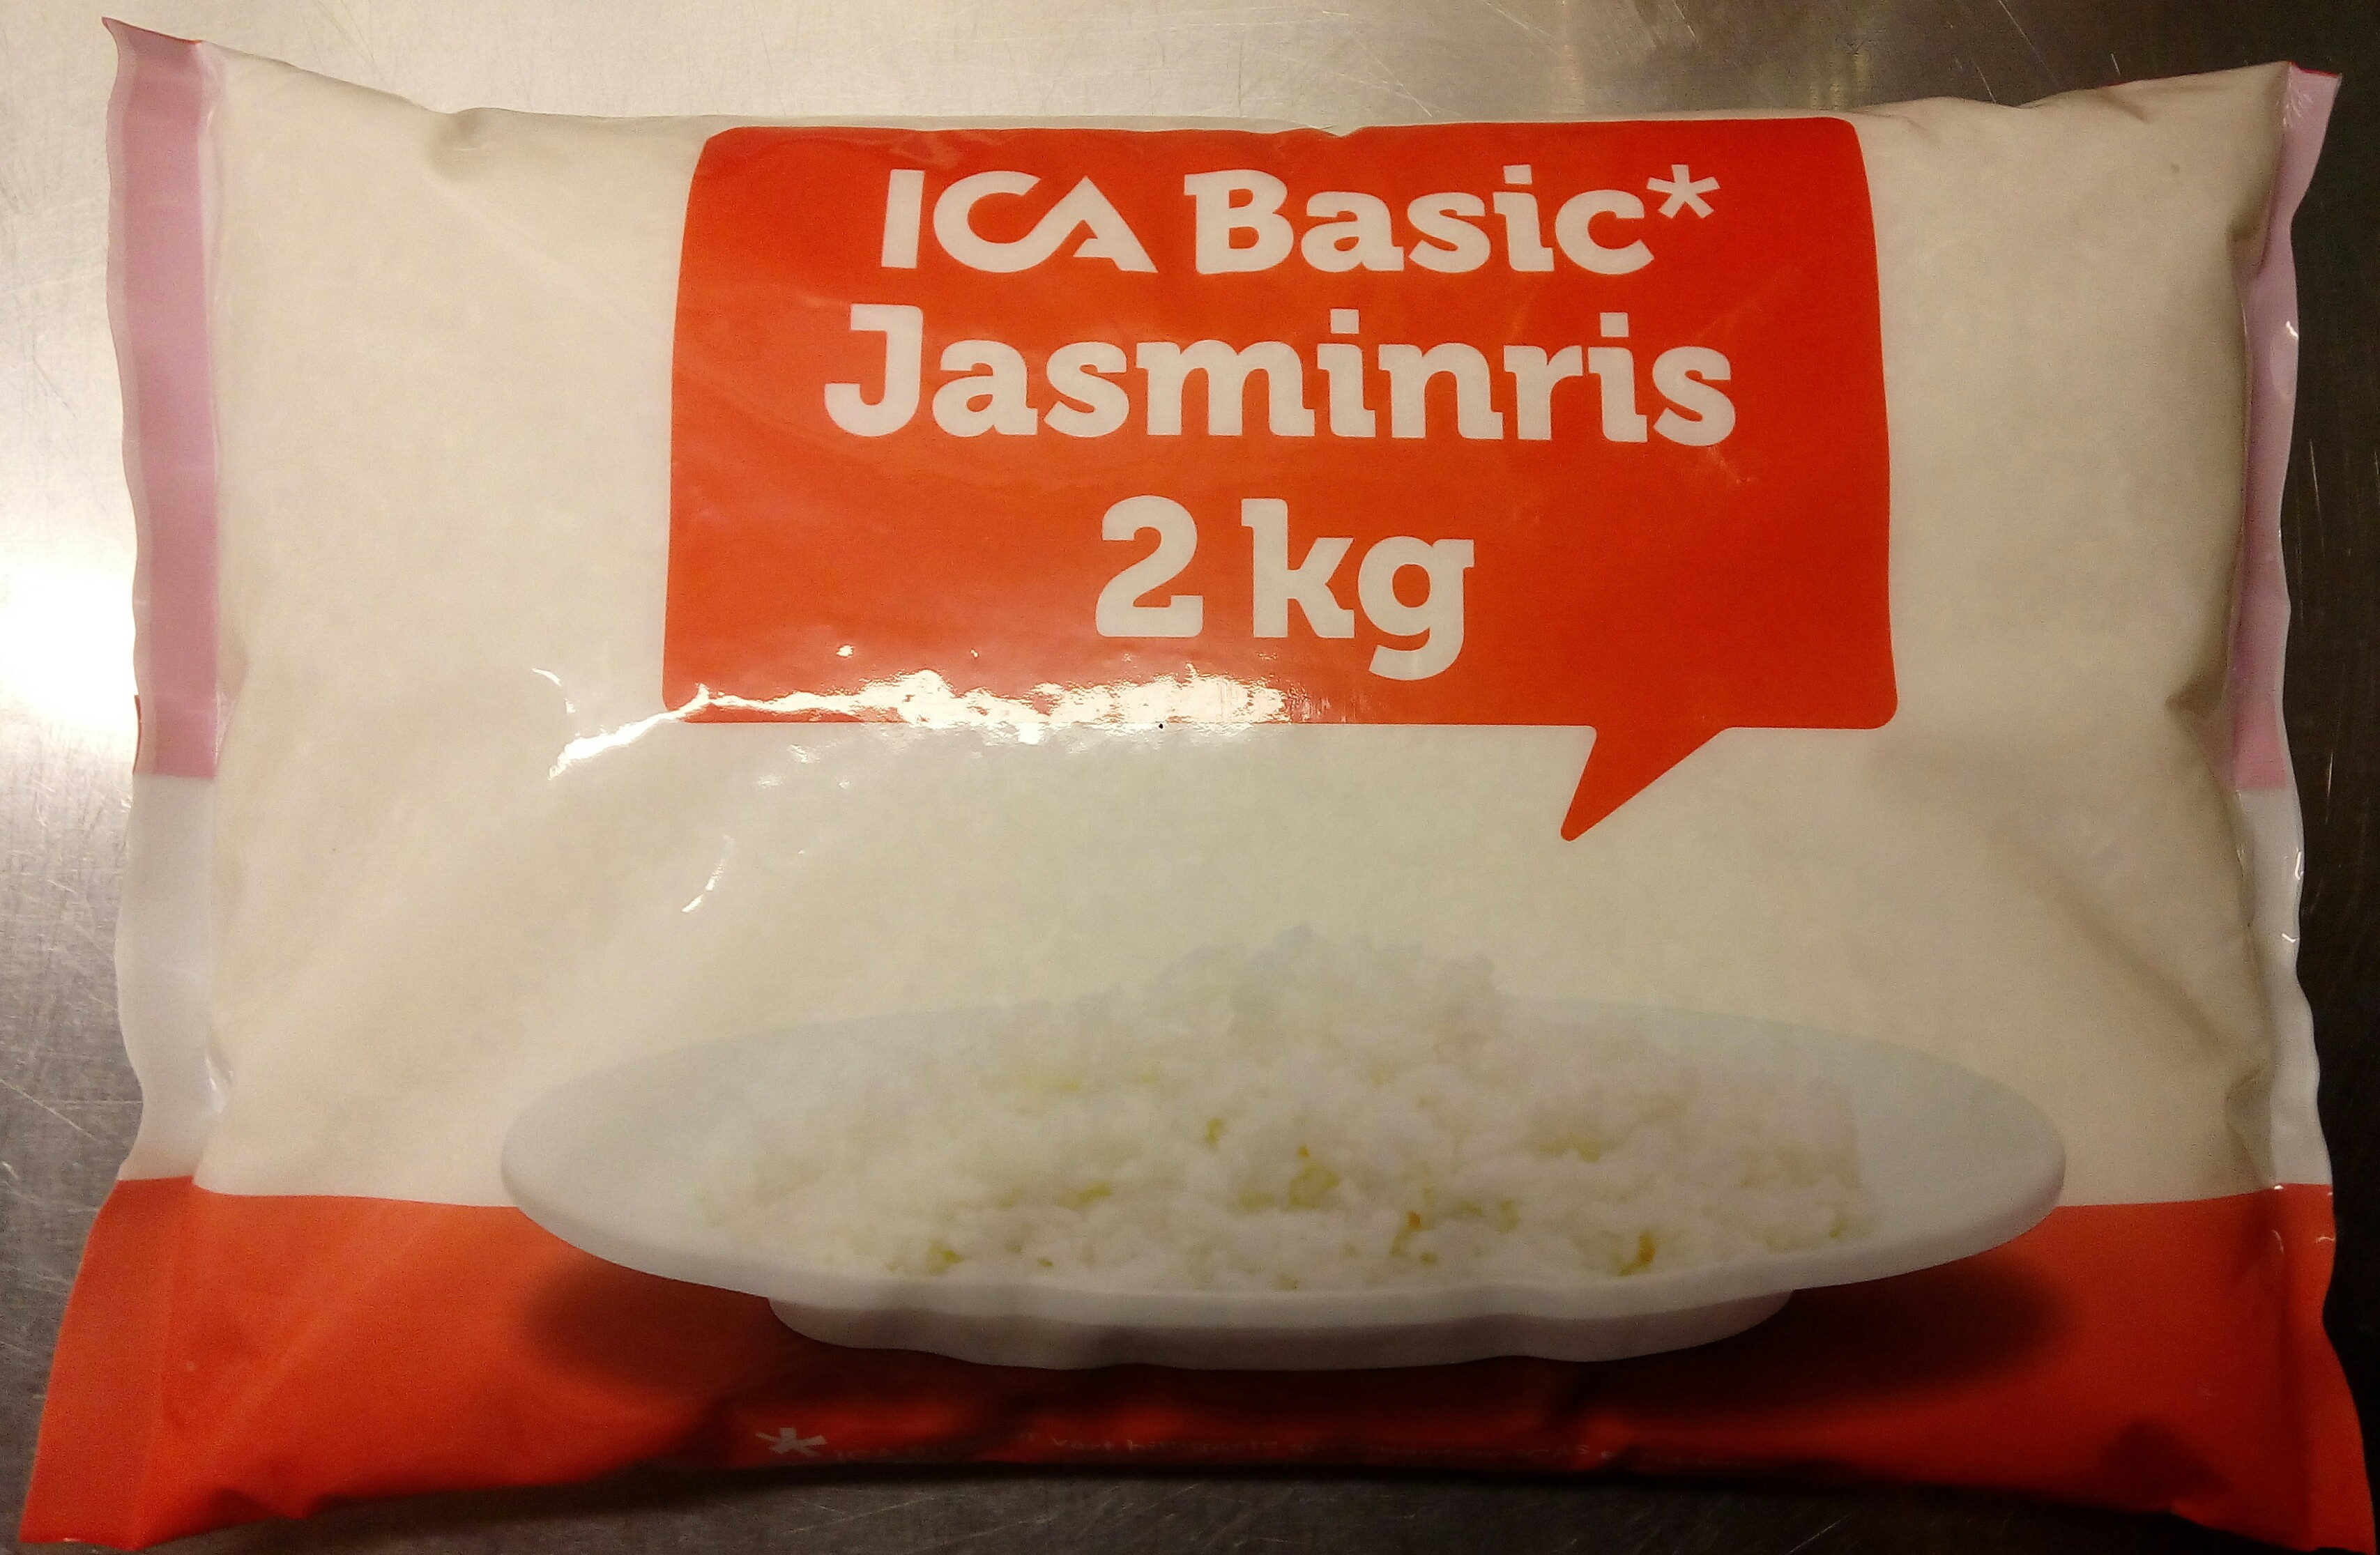 ICA Basic Jasminris - Produit - sv